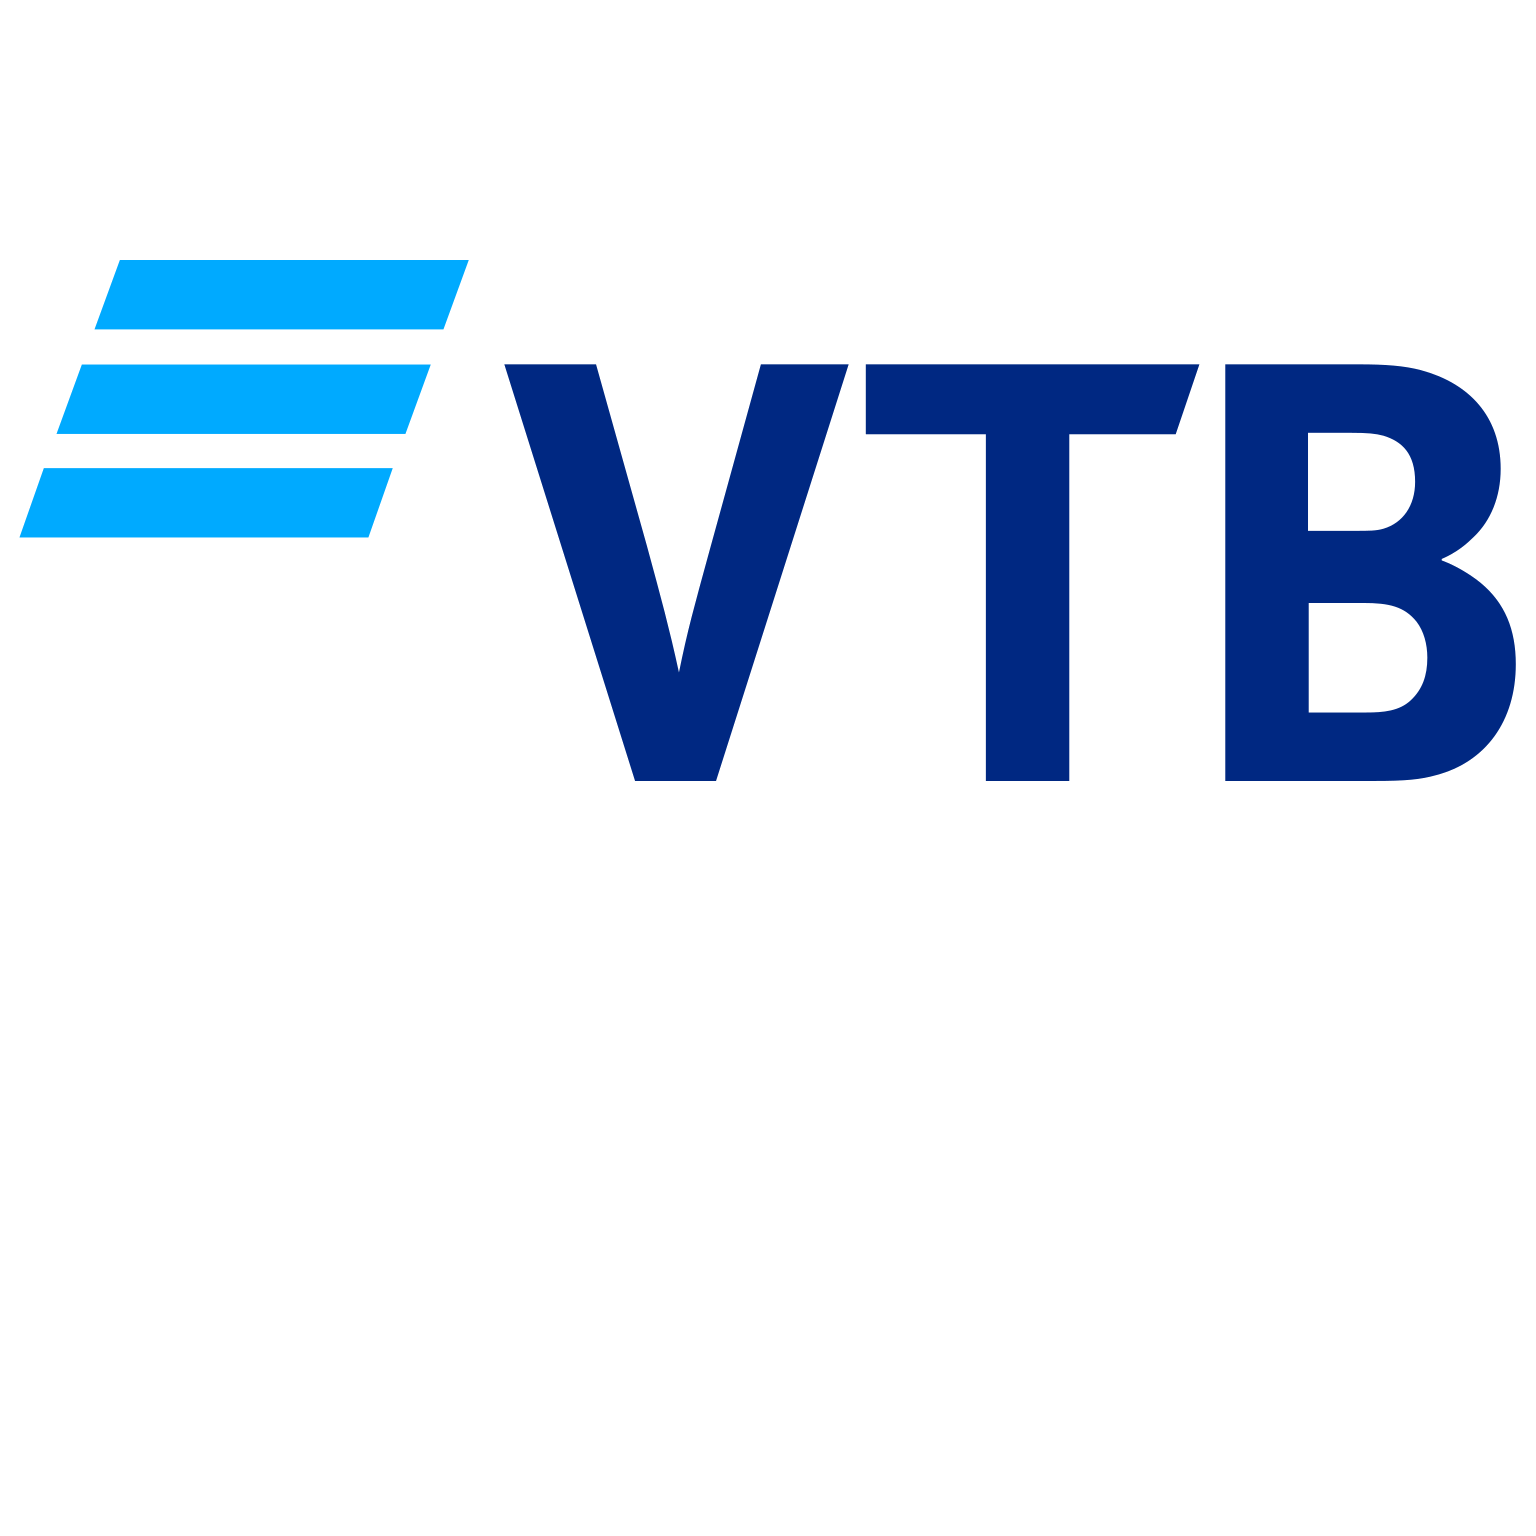 VTB-Logo-wg-Bug